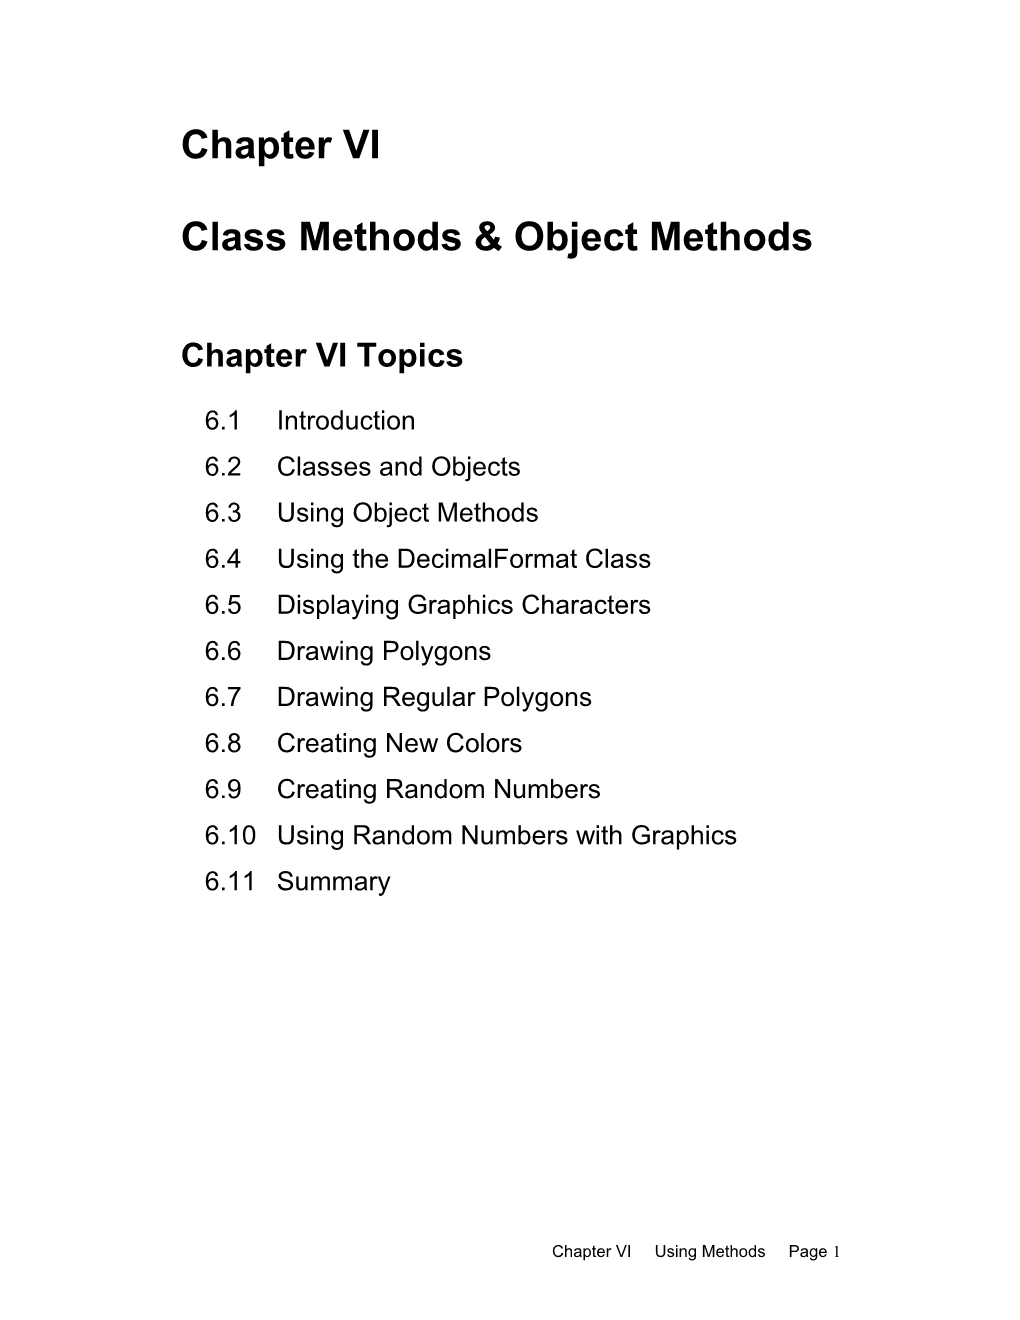 Class Methods & Object Methods